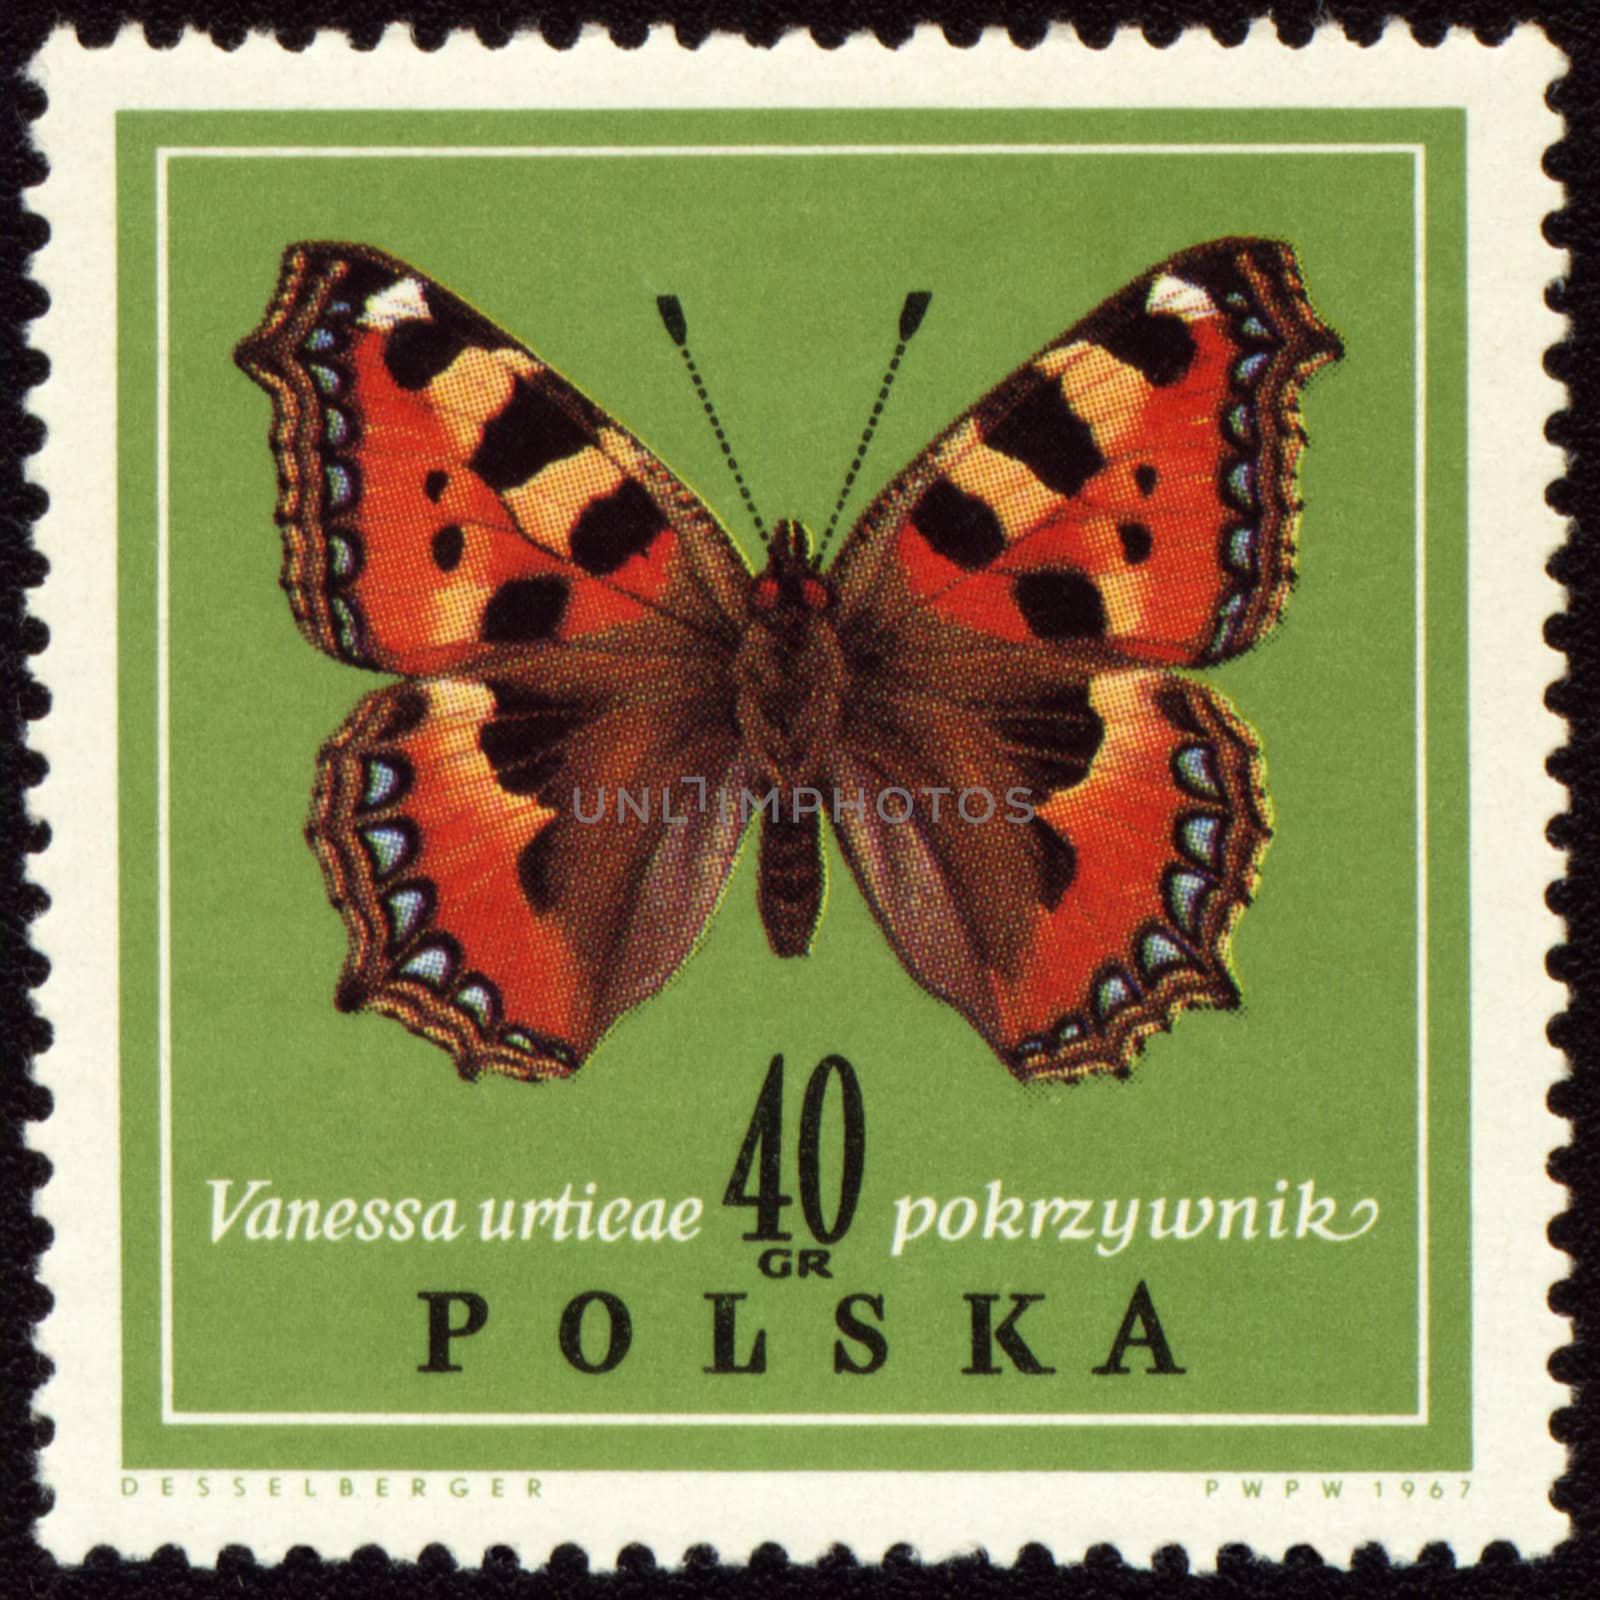 POLAND - CIRCA 1967: stamp printed in Poland shows butterfly Vanessa urtieae, circa 1967